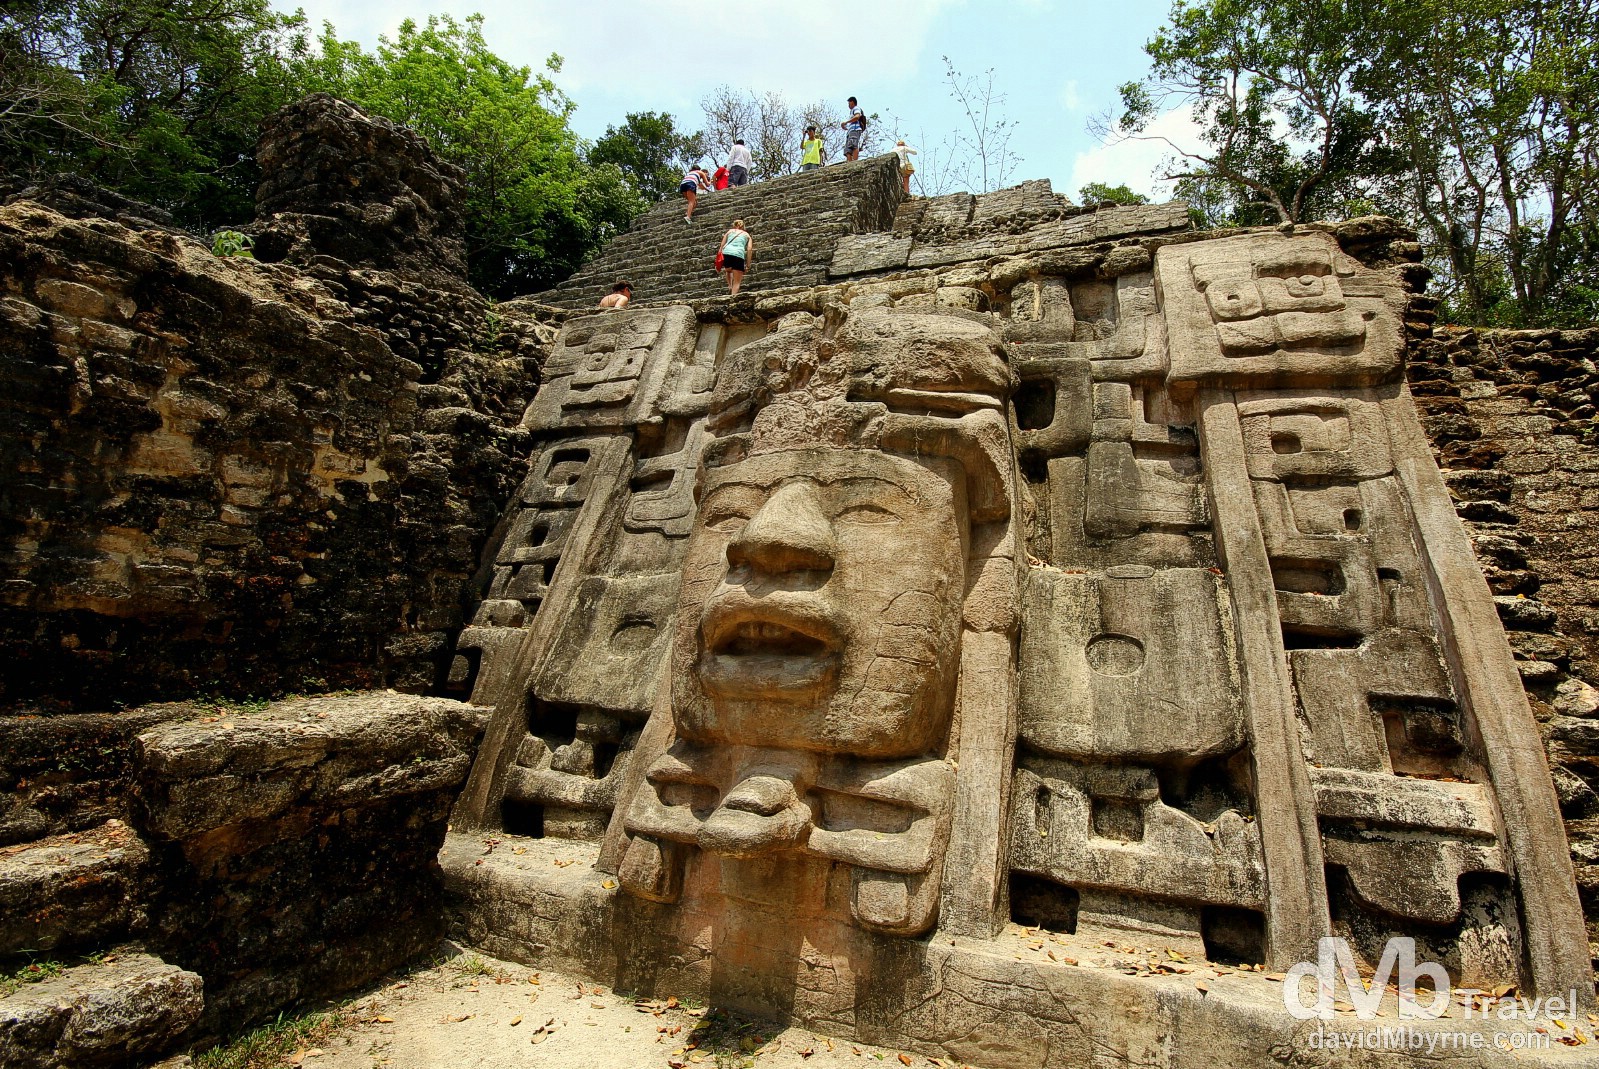 Scaling the aptly named Mask Temple at the Lamanai Mayan ruins, Central Belize. May 11th 2013.